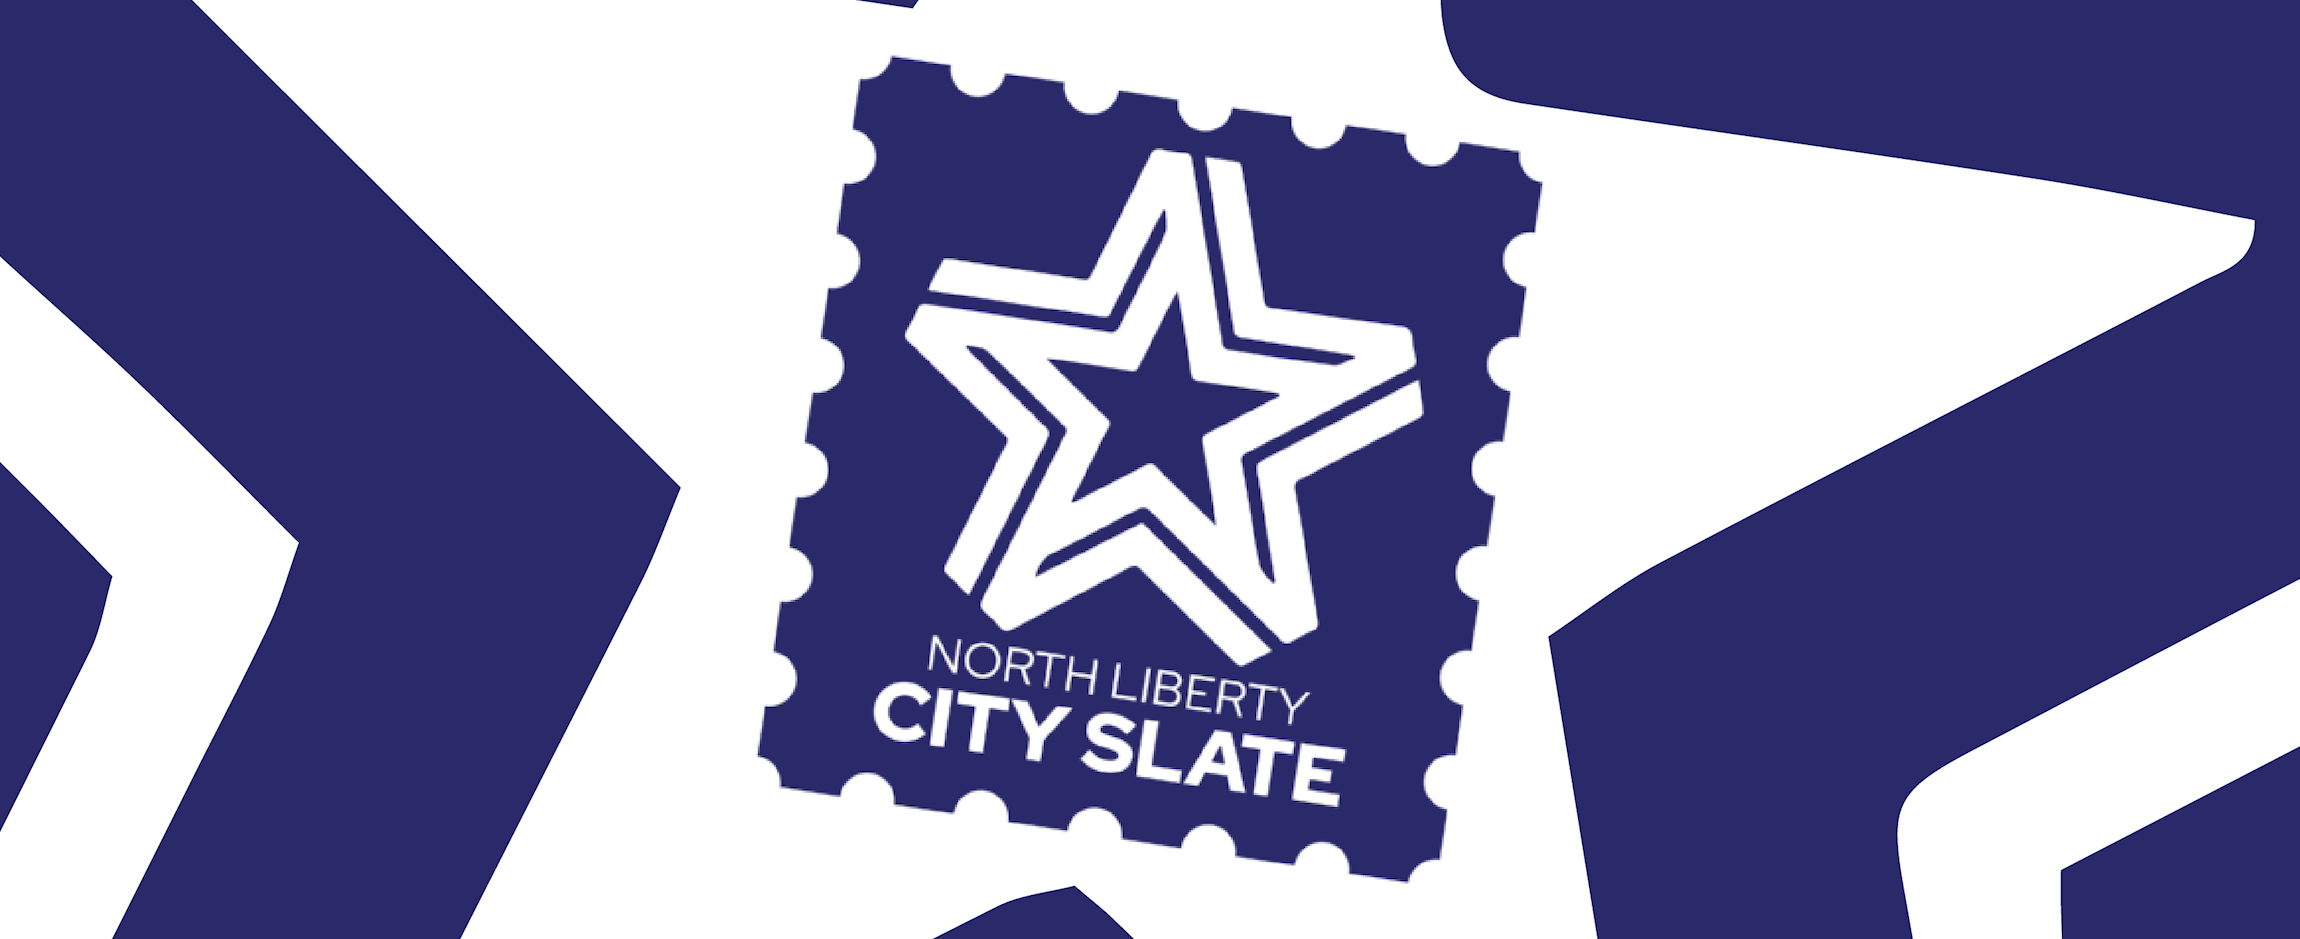 City Slate event logo